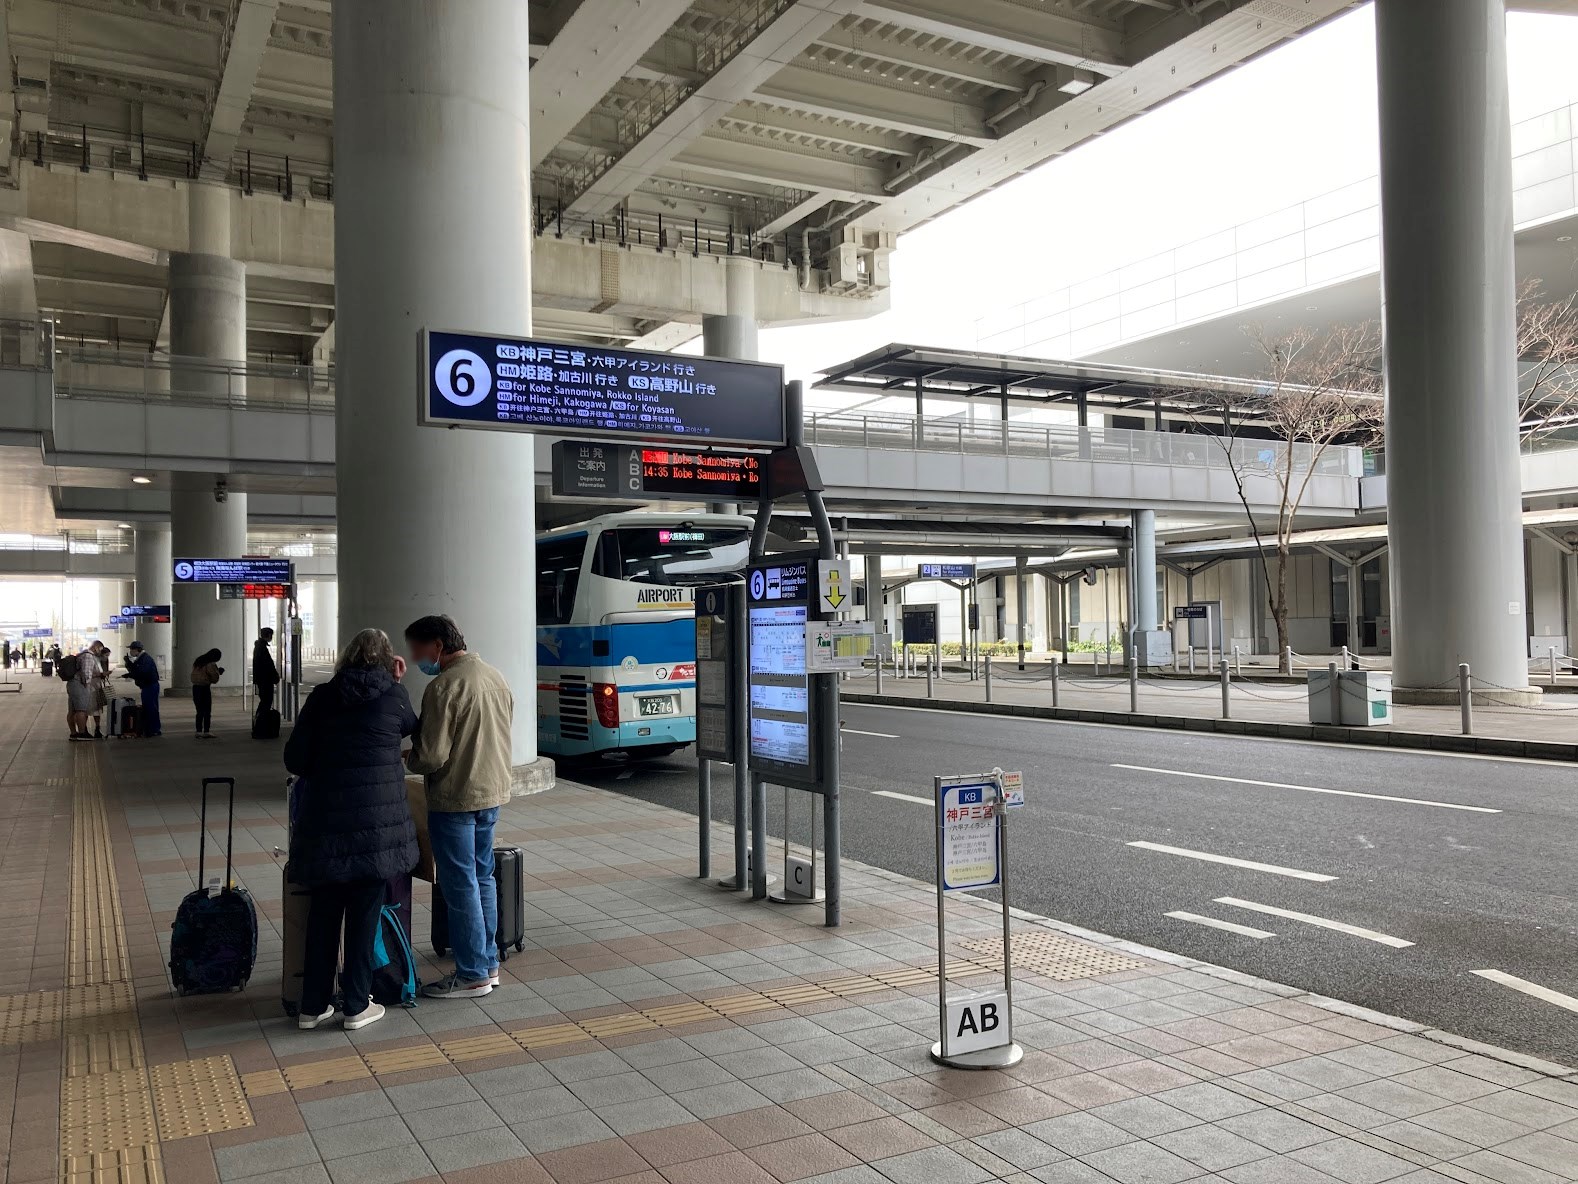 Kansai Airport limousine bus stop for Kobe area